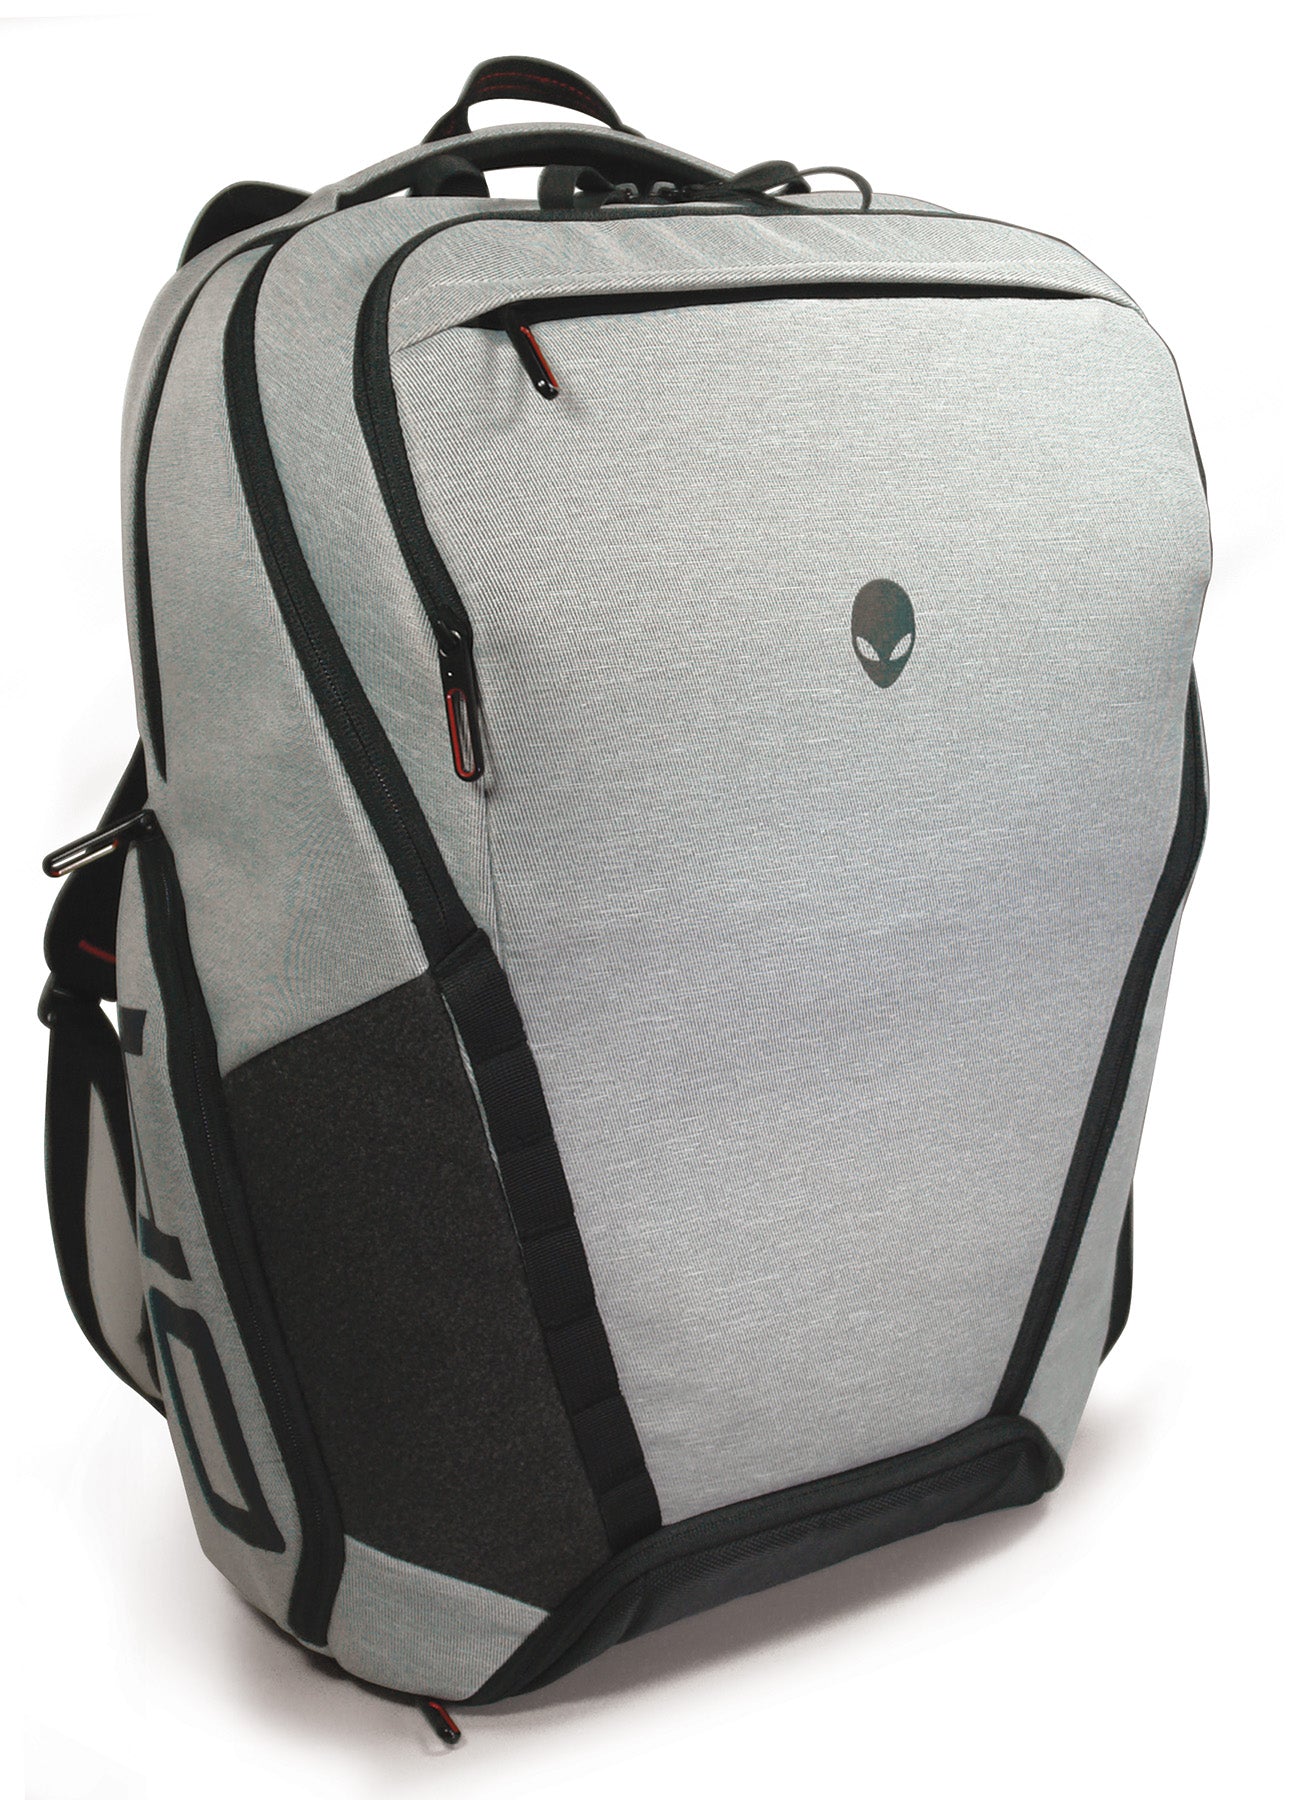 Buy Dell Alienware Horizon Utility Backpack online Worldwide - Tejar.com